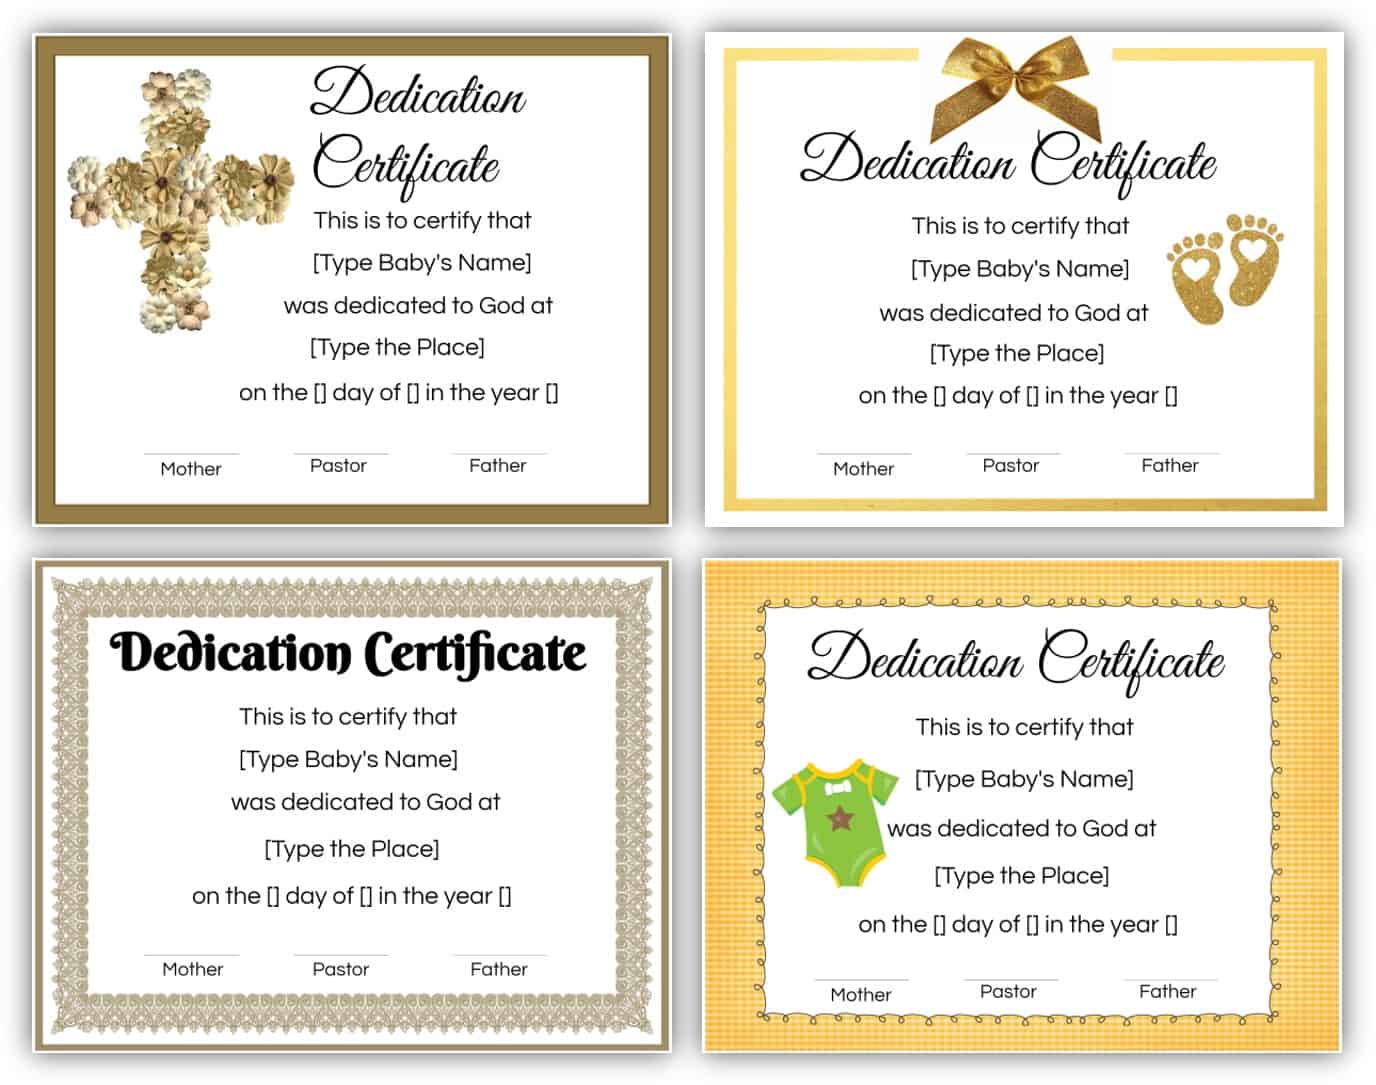 certificate-of-dedication-baby-dedication-certificate-certificate